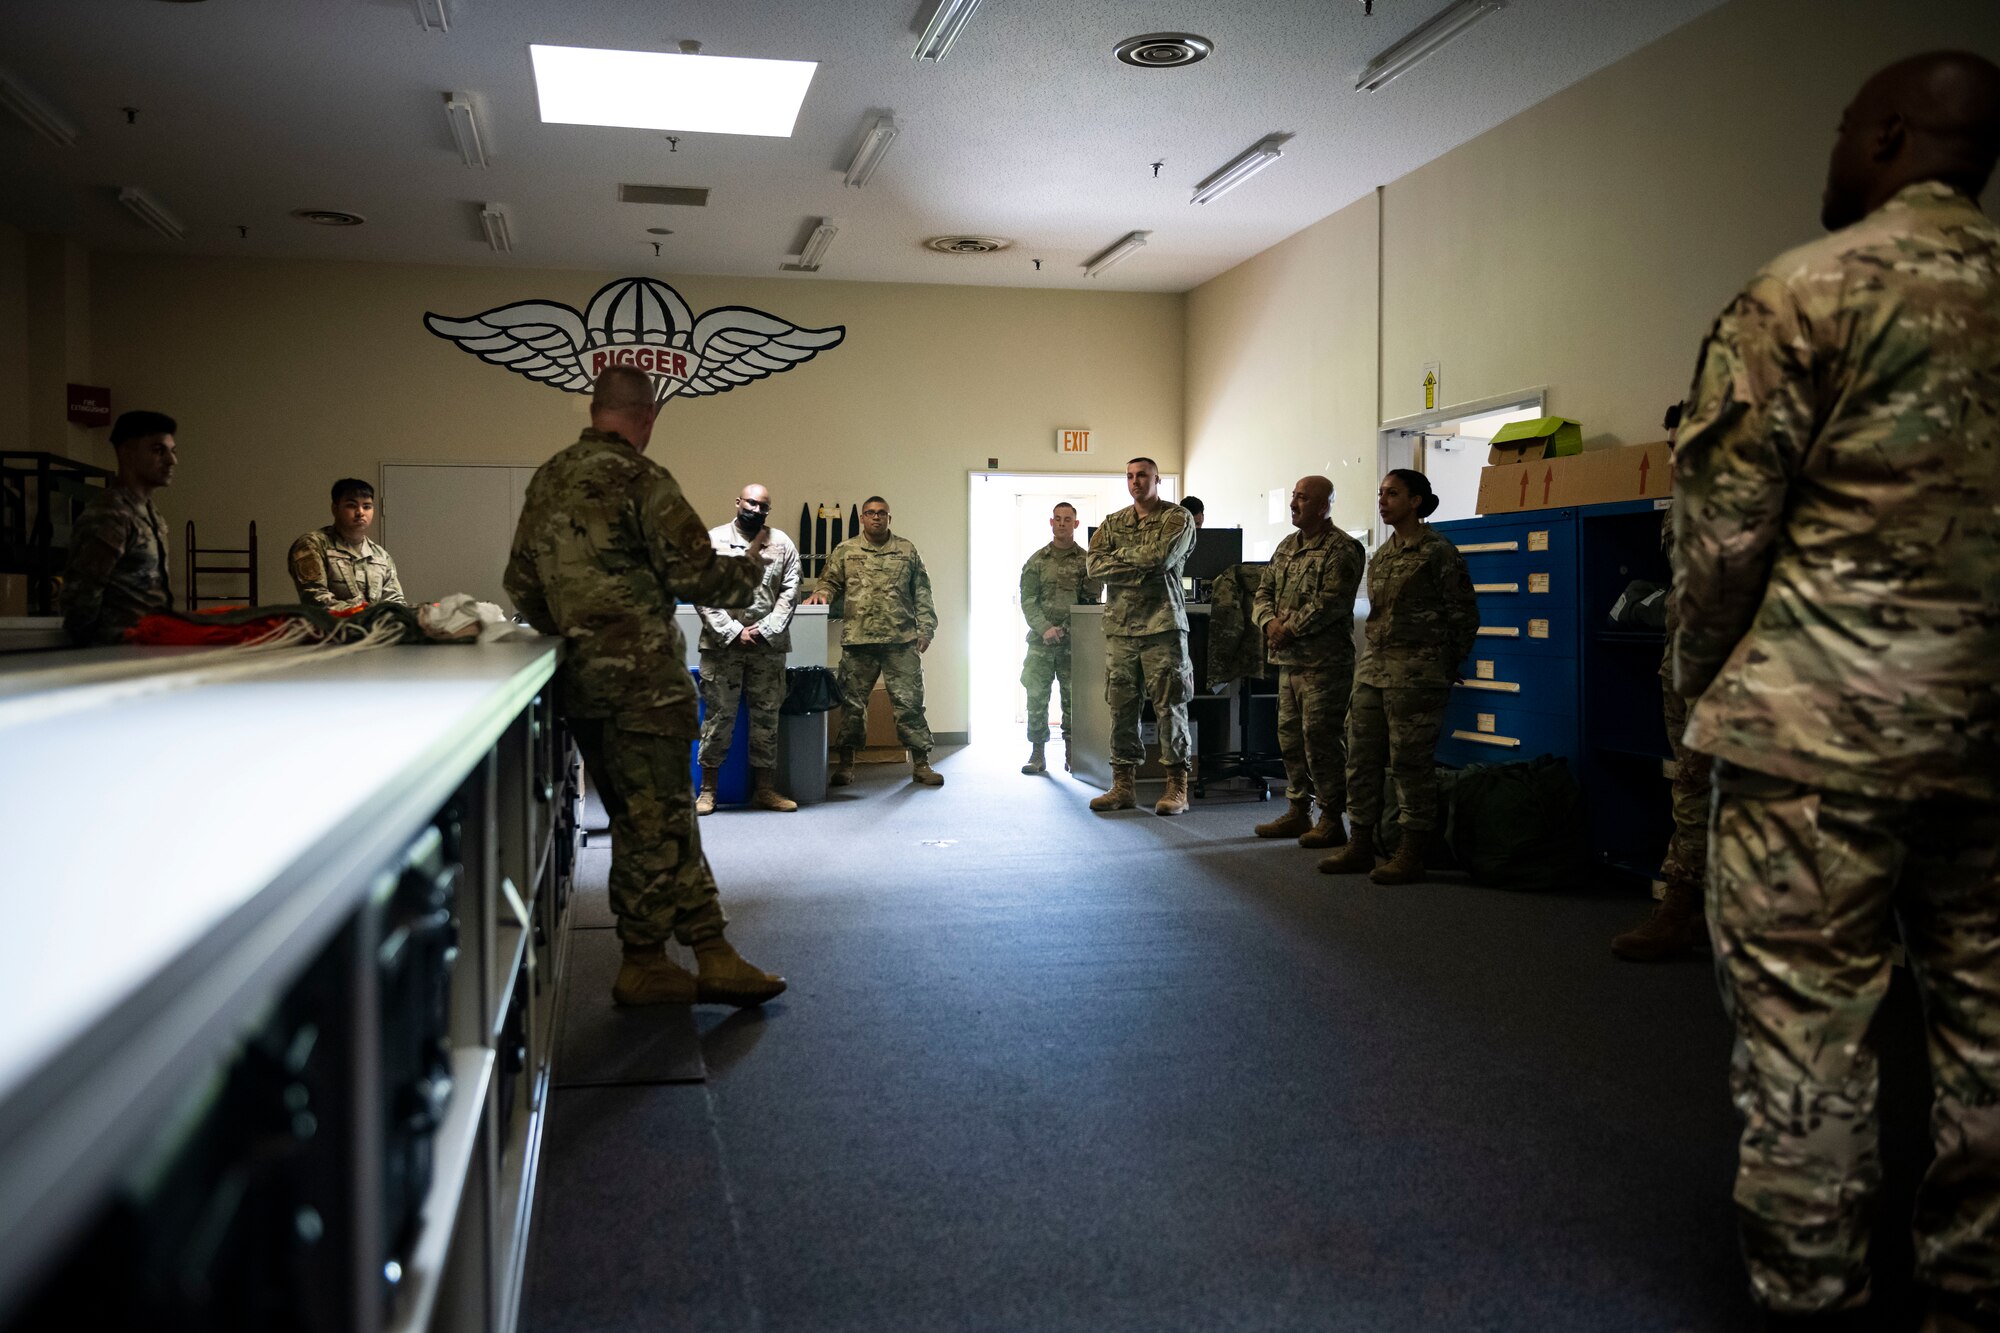 U.S. military members in uniform stand in room talking.